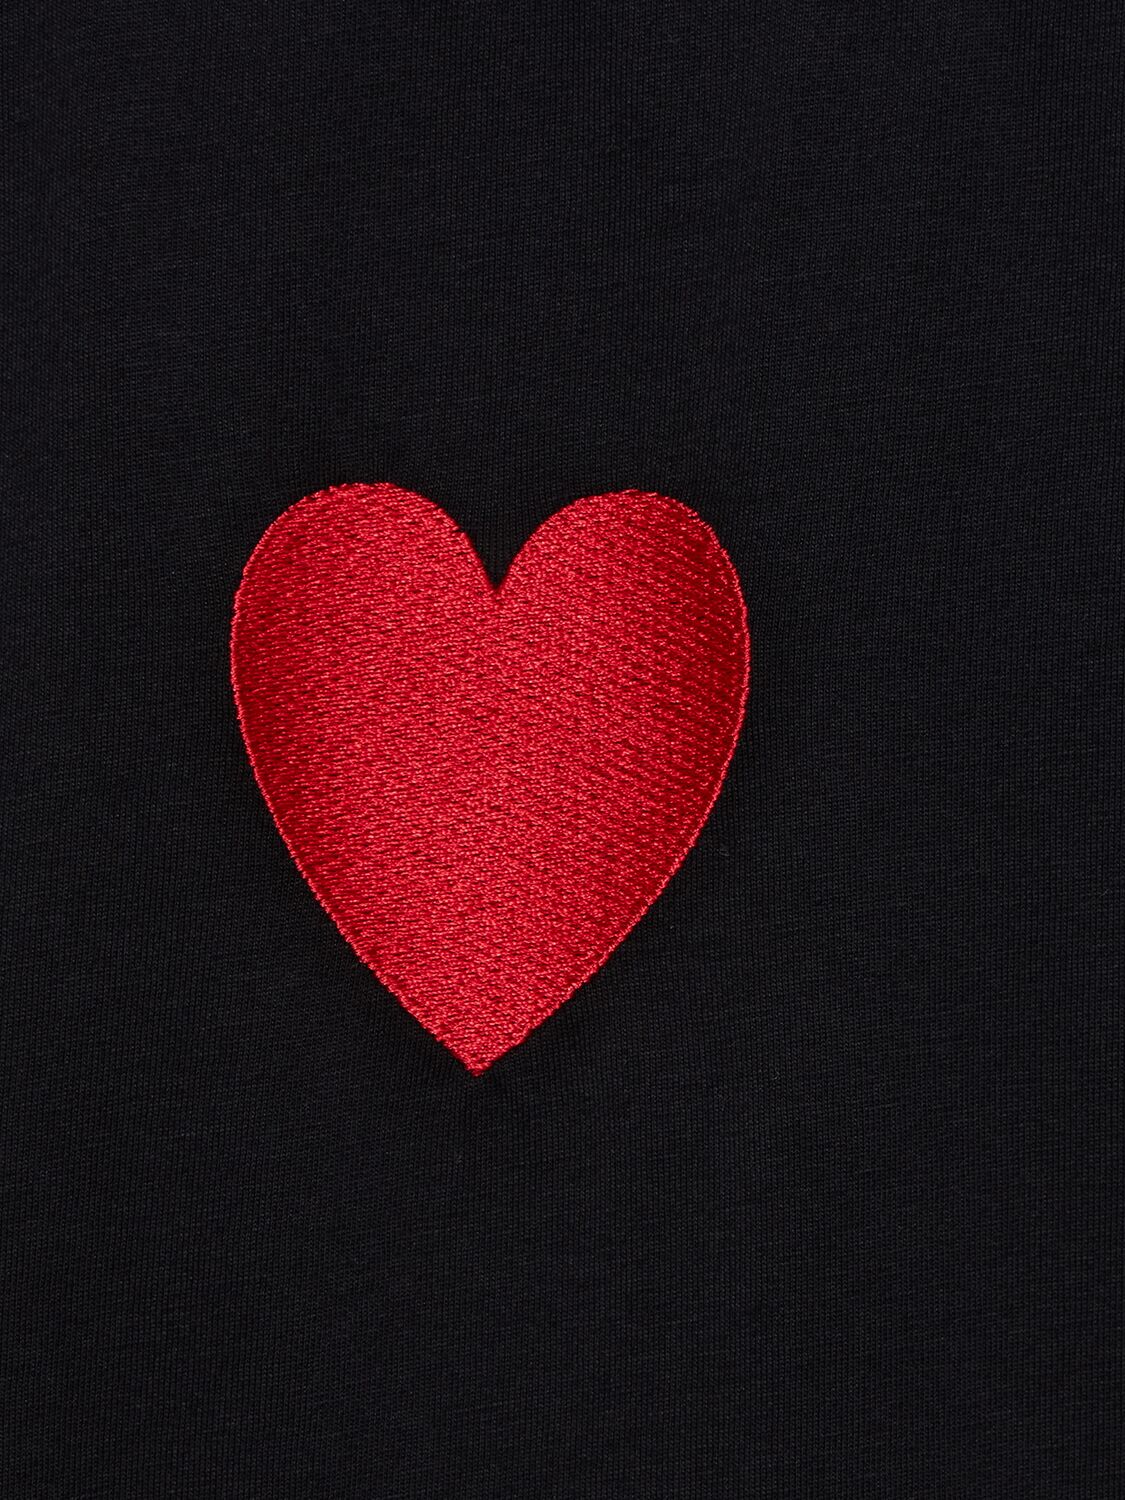 IN LOVE WE TRUST棉质平纹针织T恤